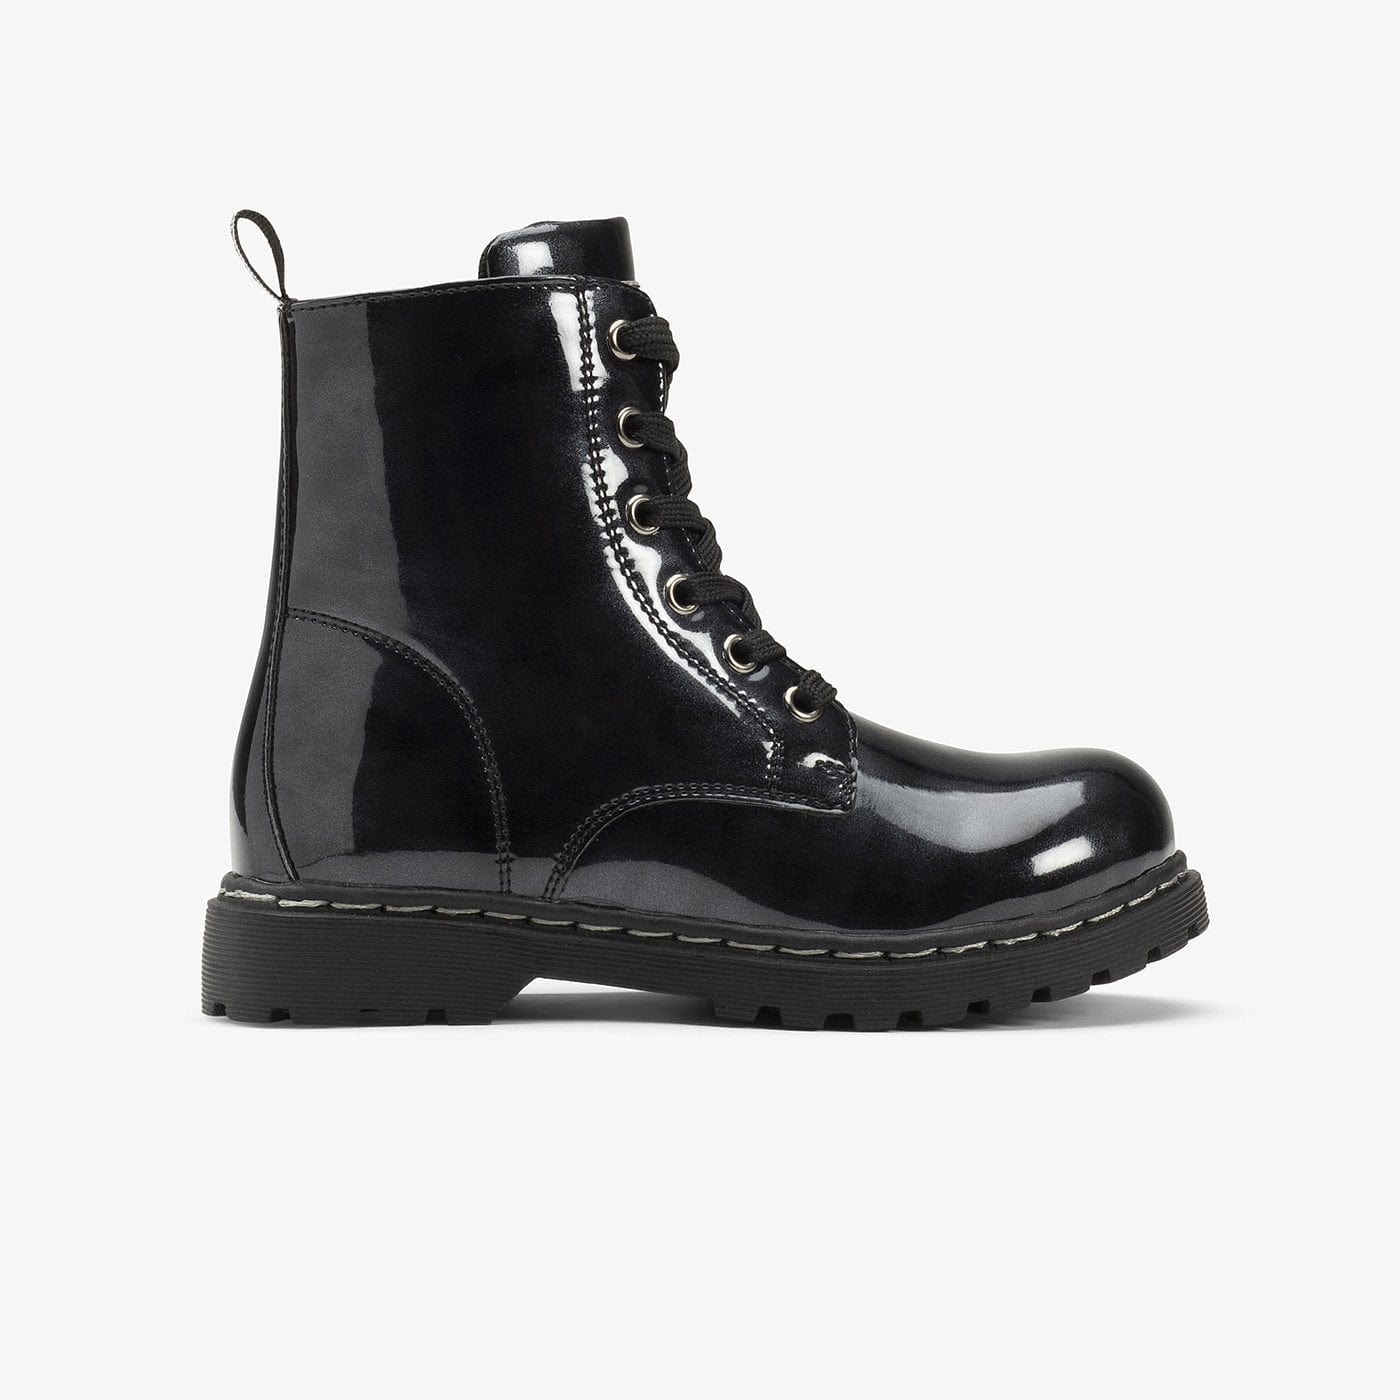 FRESAS CON NATA Shoes Children's Black Patent Leather Boots